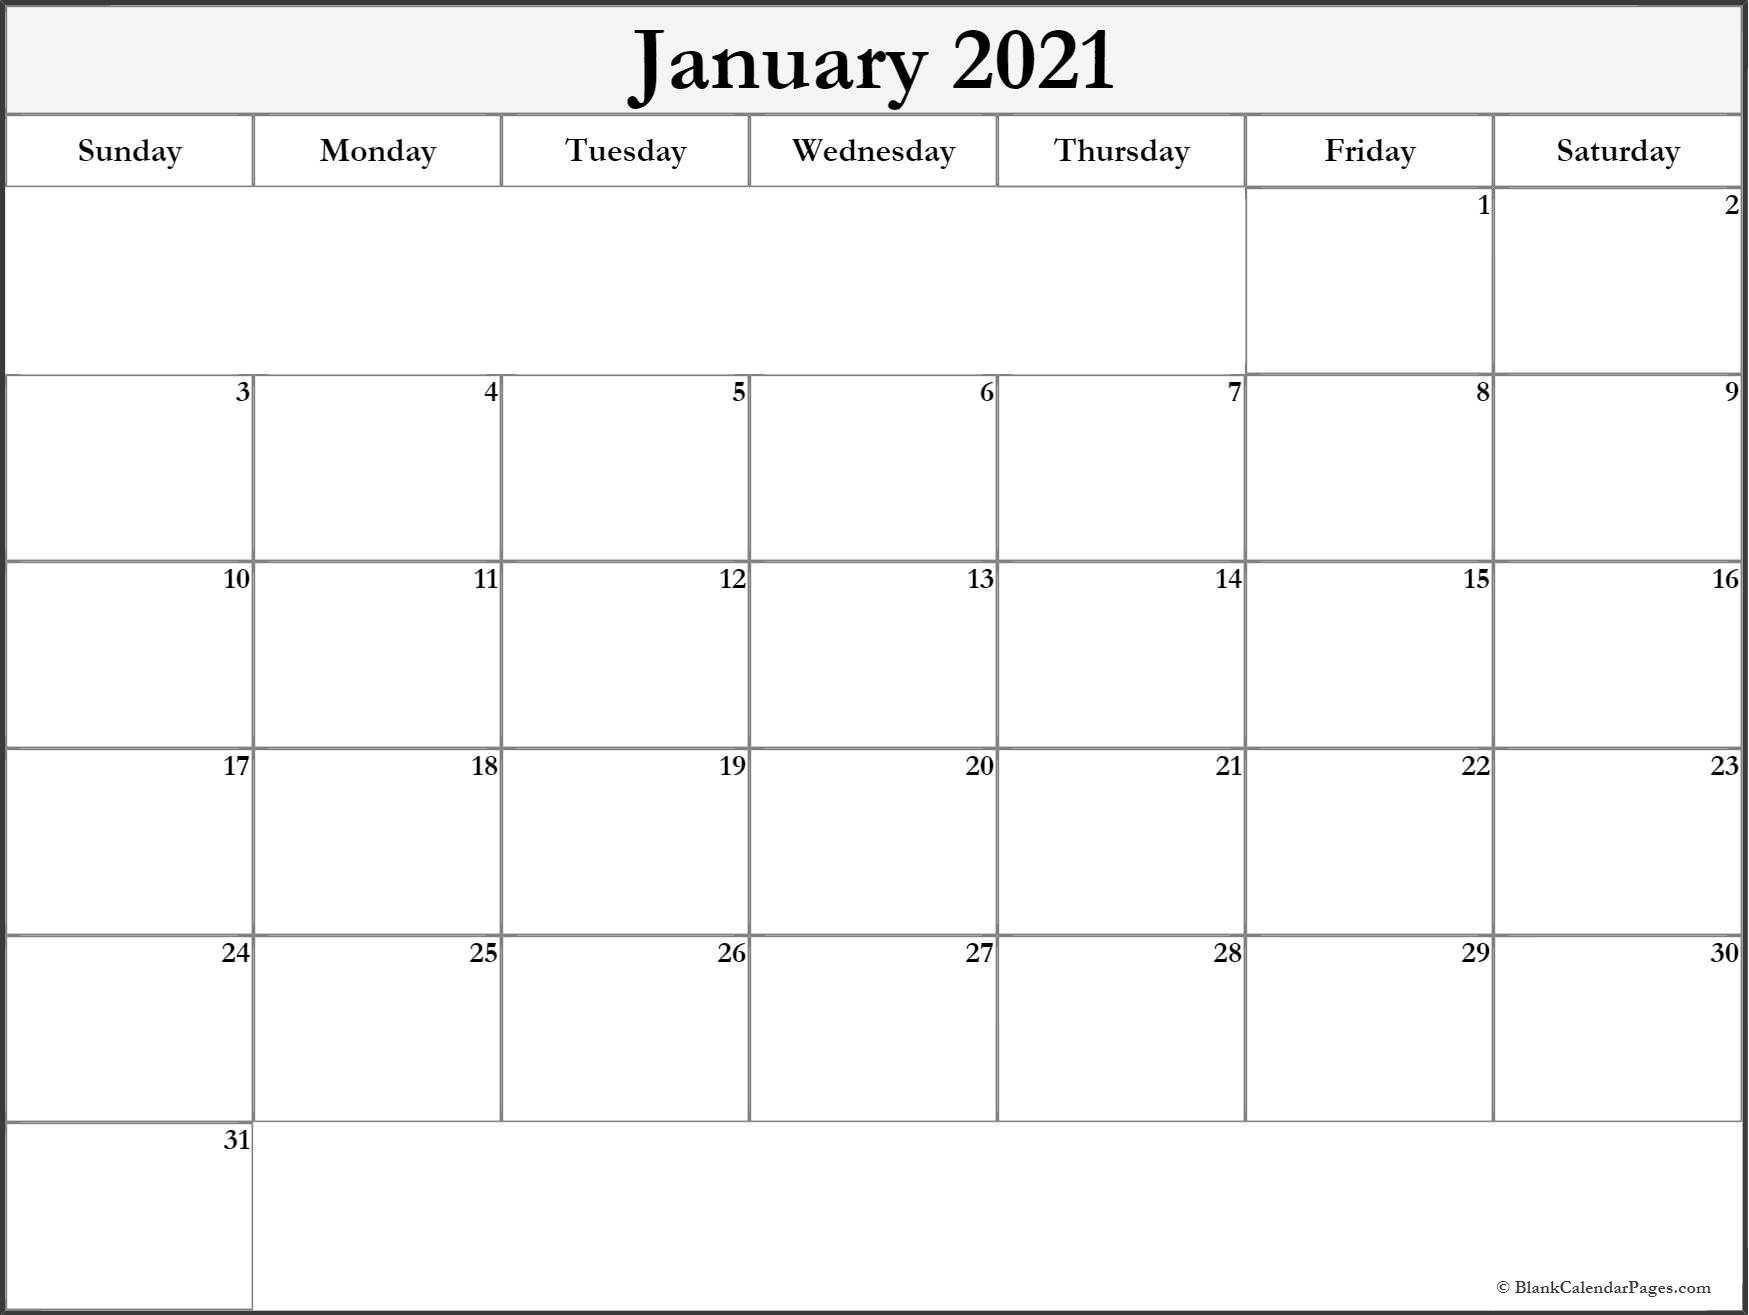 CAL=January 2021 calendar